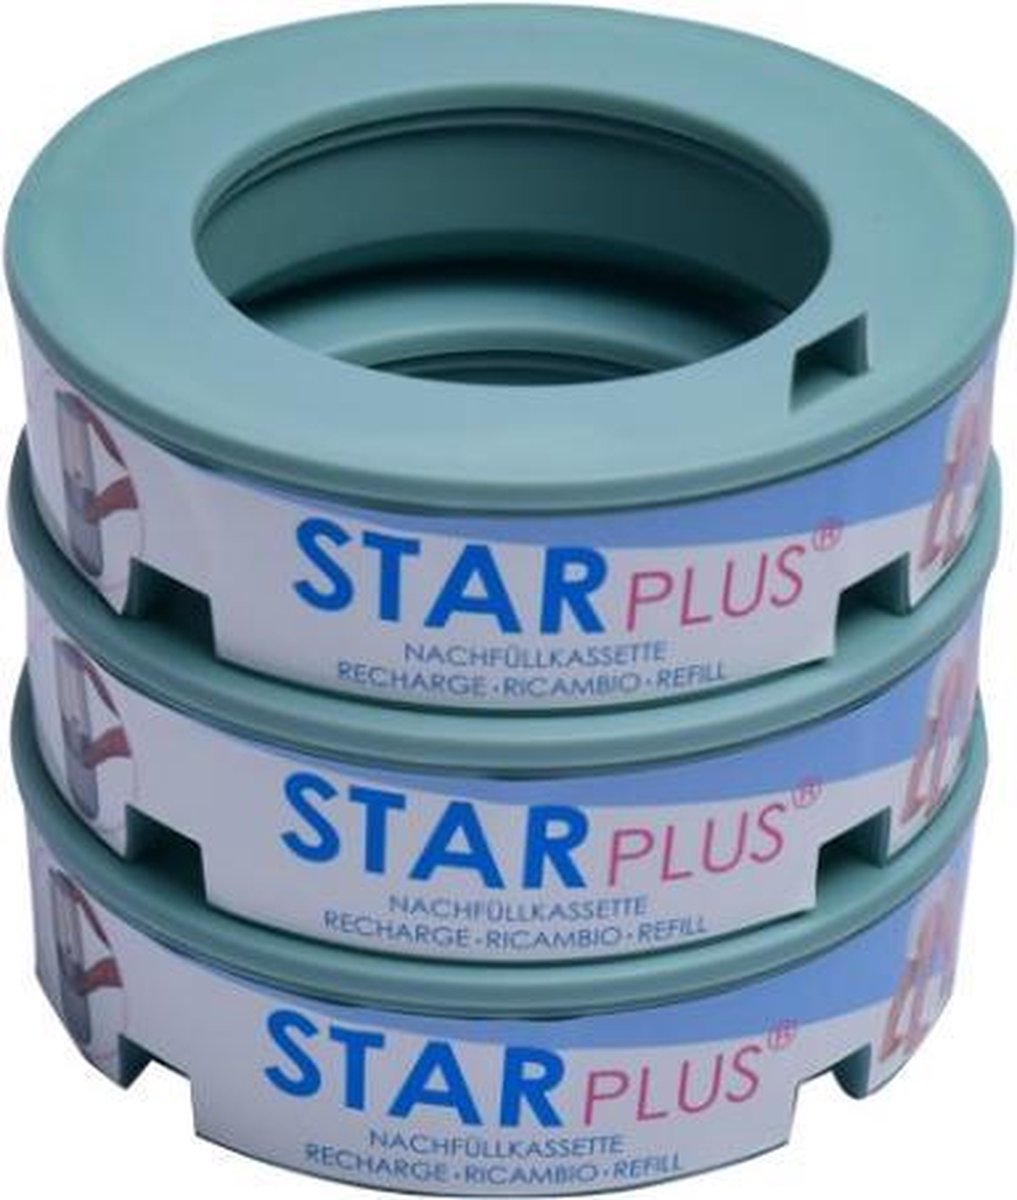 StarPlus Luieremmer Navulcassettes (3 stuks) - Navulling voor Luieremmers